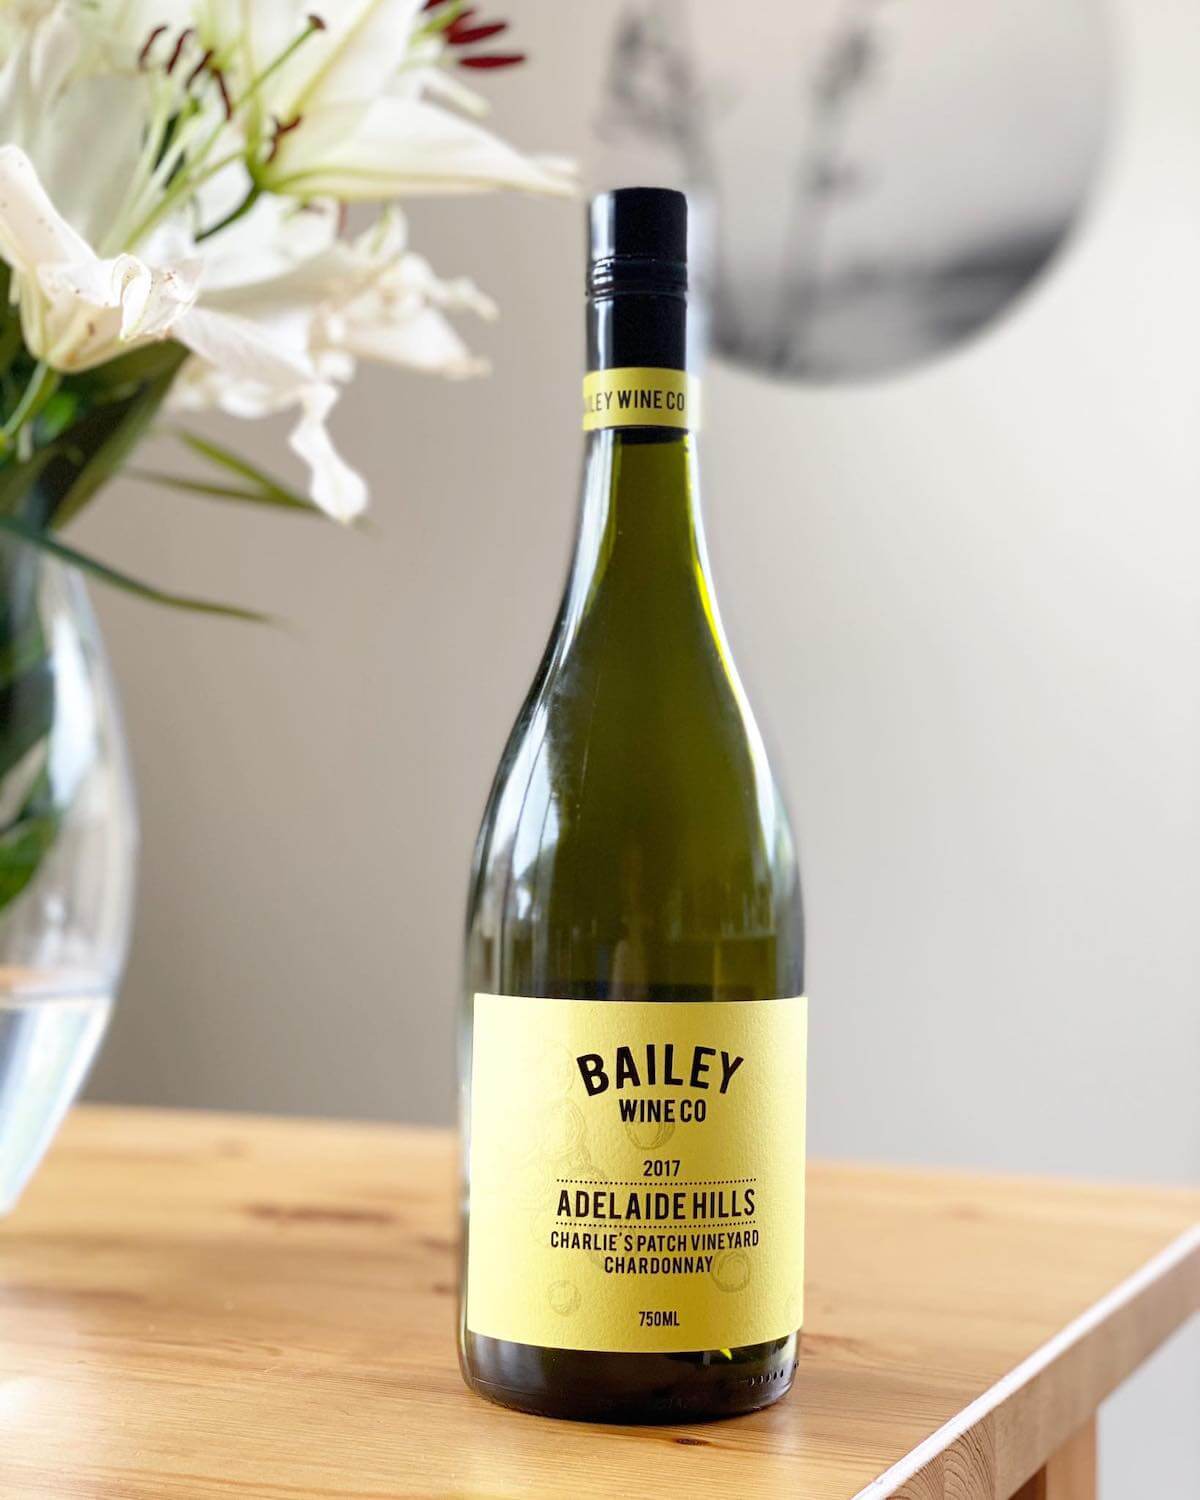 Bailey Wine Co 2017 Charlie's Patch Chardonnay